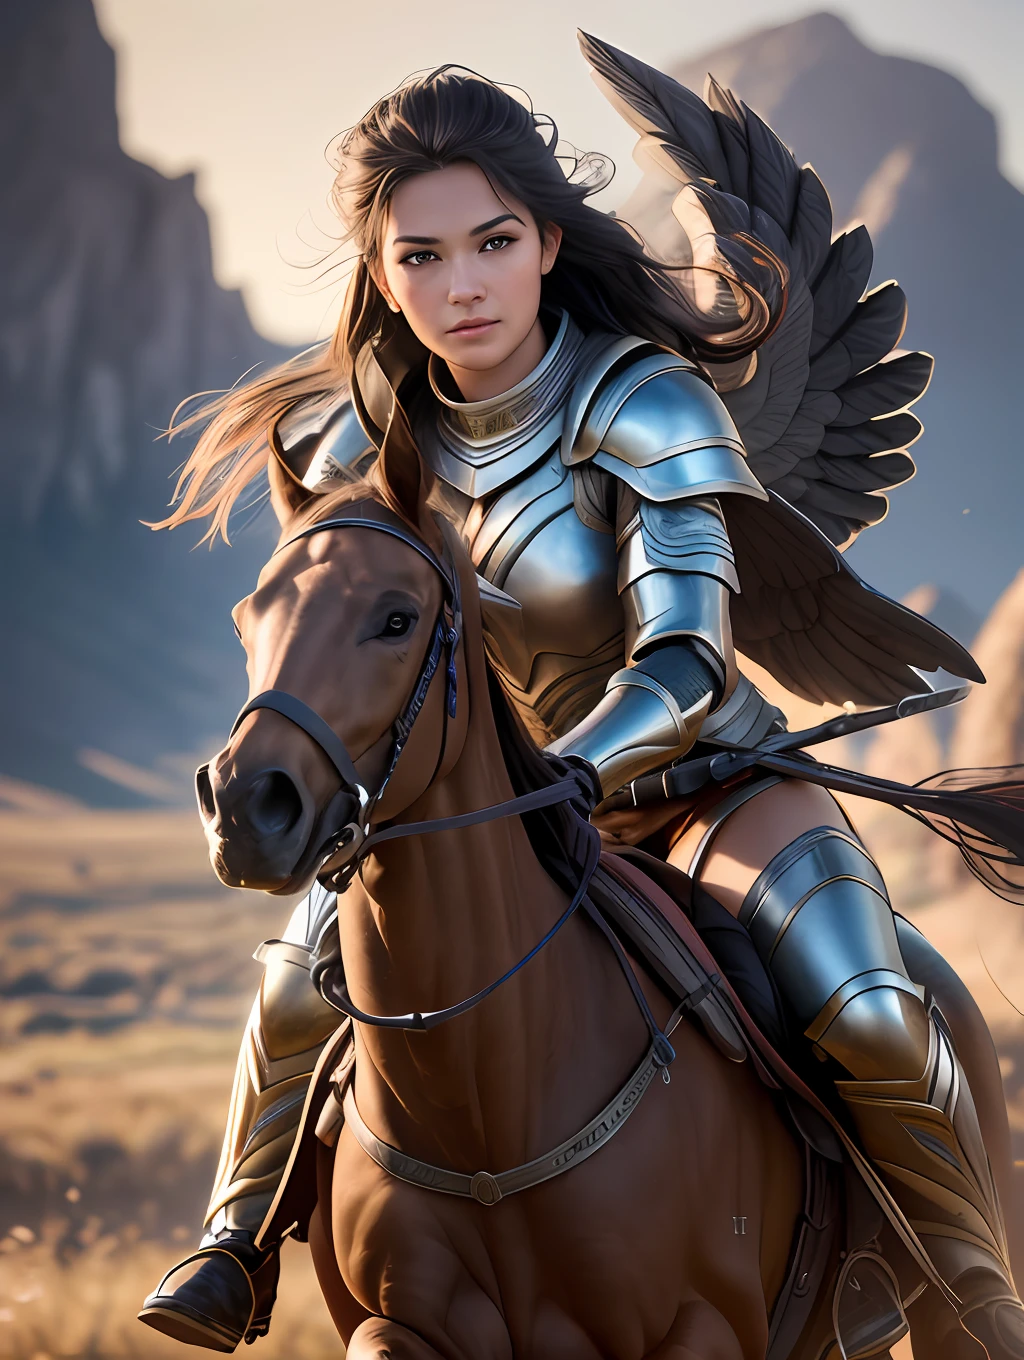 An ultrareakistic epic 照片y of a Valkyrie warrior on a horse riding into the battle, 激烈的行動, 電影邊緣光, 激烈的行動, 動態並置, 年輕的戰士, very 高品質 face, 可利用的影像, 長長的風髮, 程式化的動態折疊, 非常質樸又美麗的女人, 全焦點, 傾斜移位, 電影燈光, 電影劇照, 電影燈光, 照片, 詳細的對稱現實臉, 非常詳細 natural texture, 桃絨毛, 傑作, 荒謬的, nikon d850 film stock 照片, 相機 f1.6鏡頭, 非常詳細, 驚人的, 精細的細節, 超寫實寫實質感, 戲劇性的燈光, 虛幻引擎, cinestill 800 鎢, 看著觀眾, 原始照片, 高品質, 高解析度, 銳利的焦點, 非常詳細, 8k超高清.